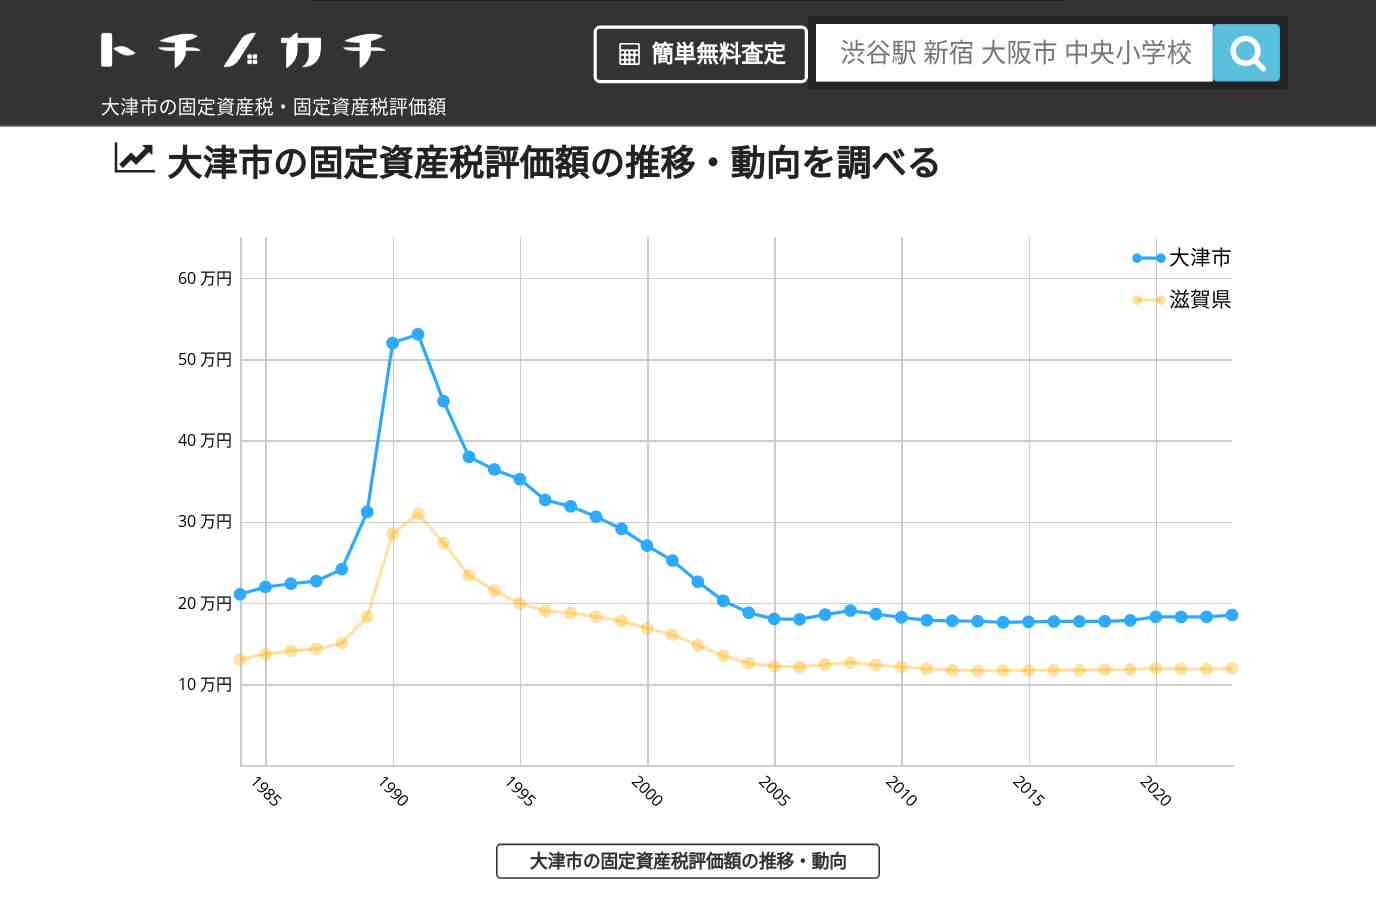 和邇小学校(滋賀県 大津市)周辺の固定資産税・固定資産税評価額 | トチノカチ